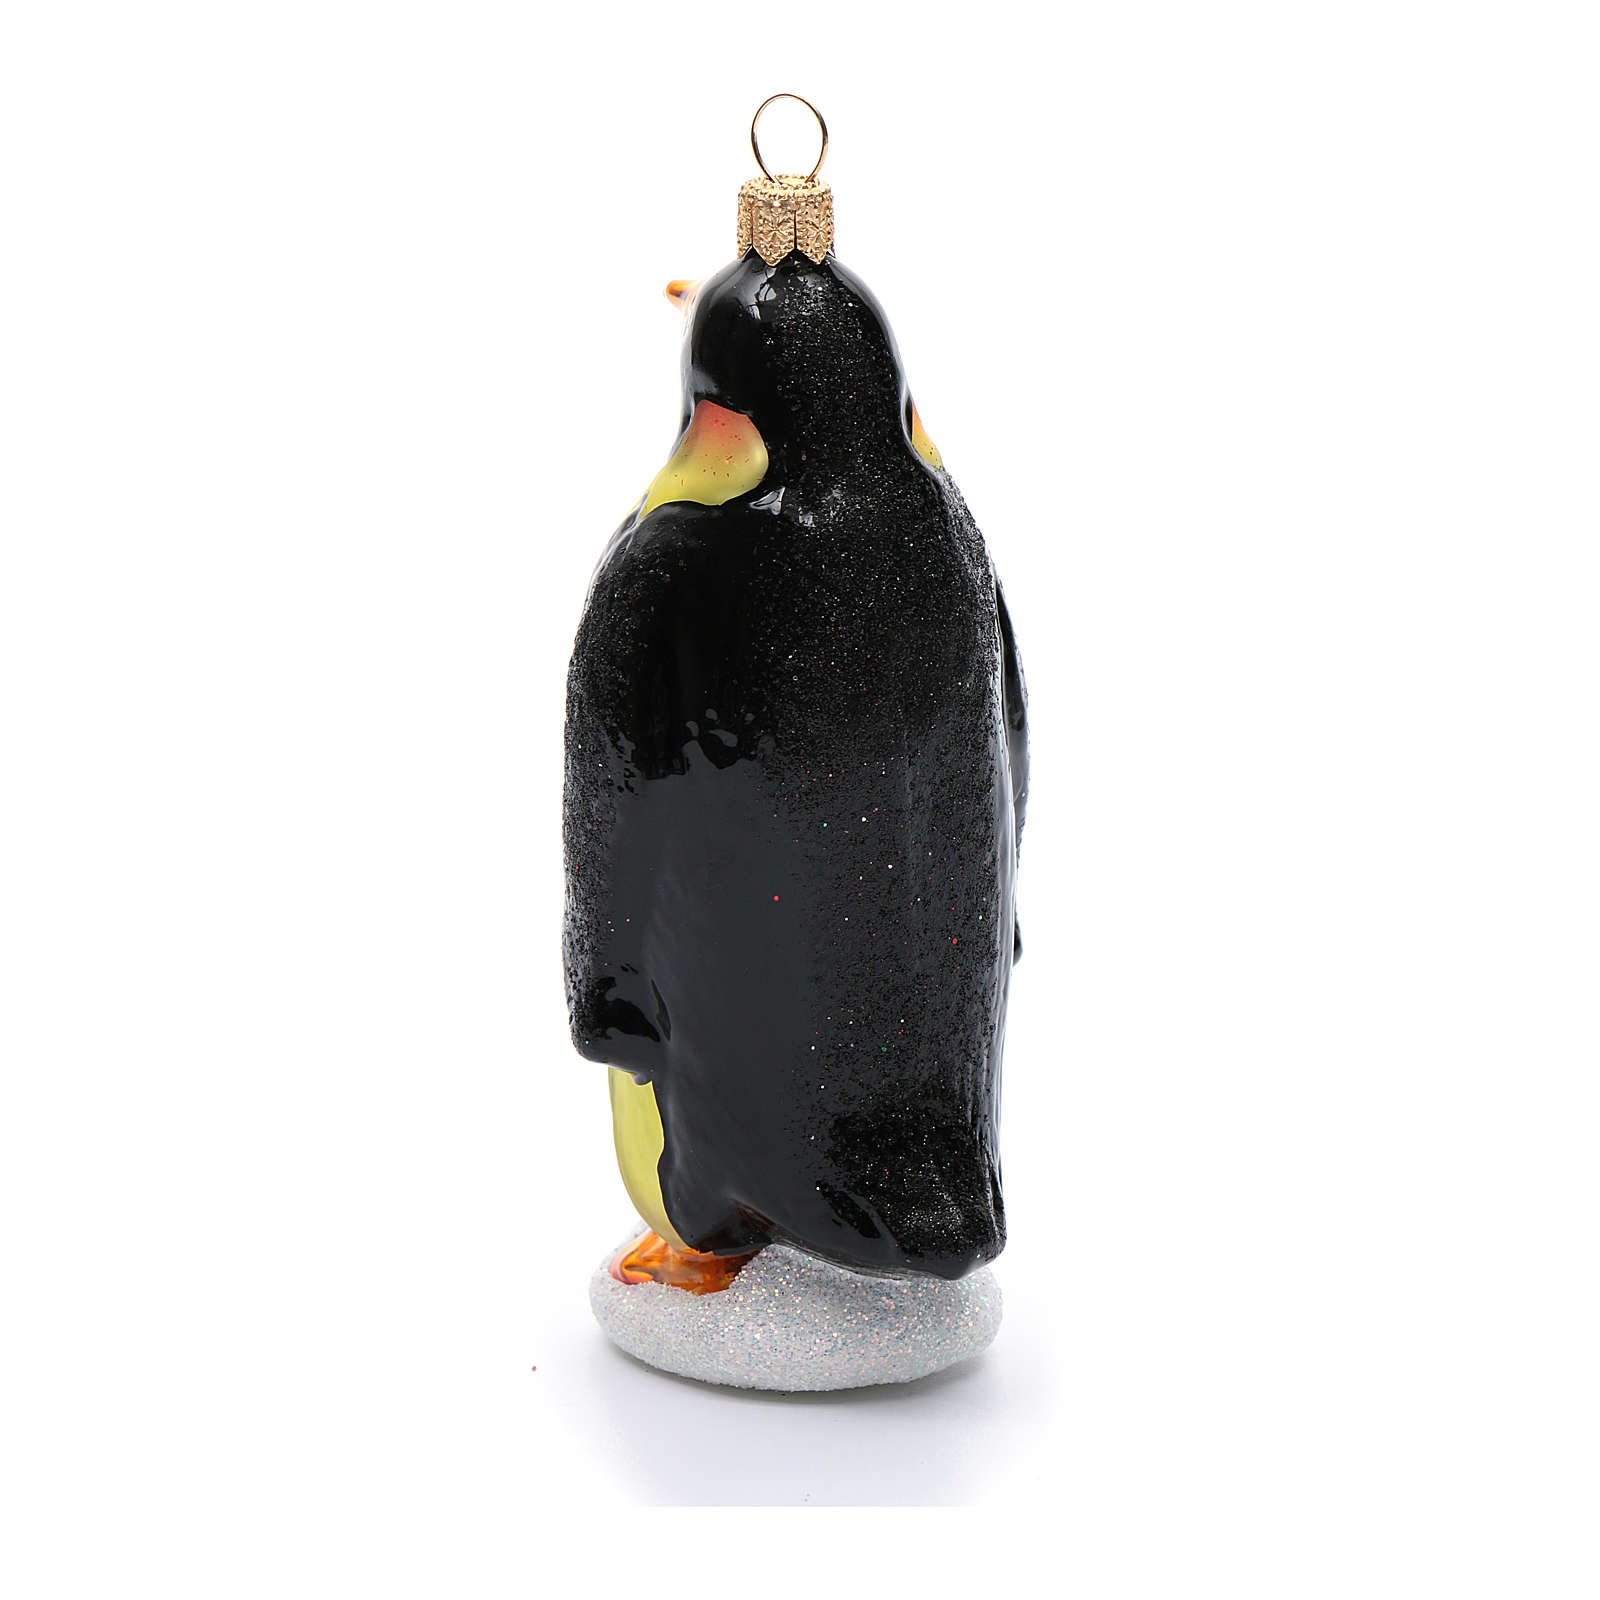 Blown glass Christmas ornament, emperor penguin | online sales on ...